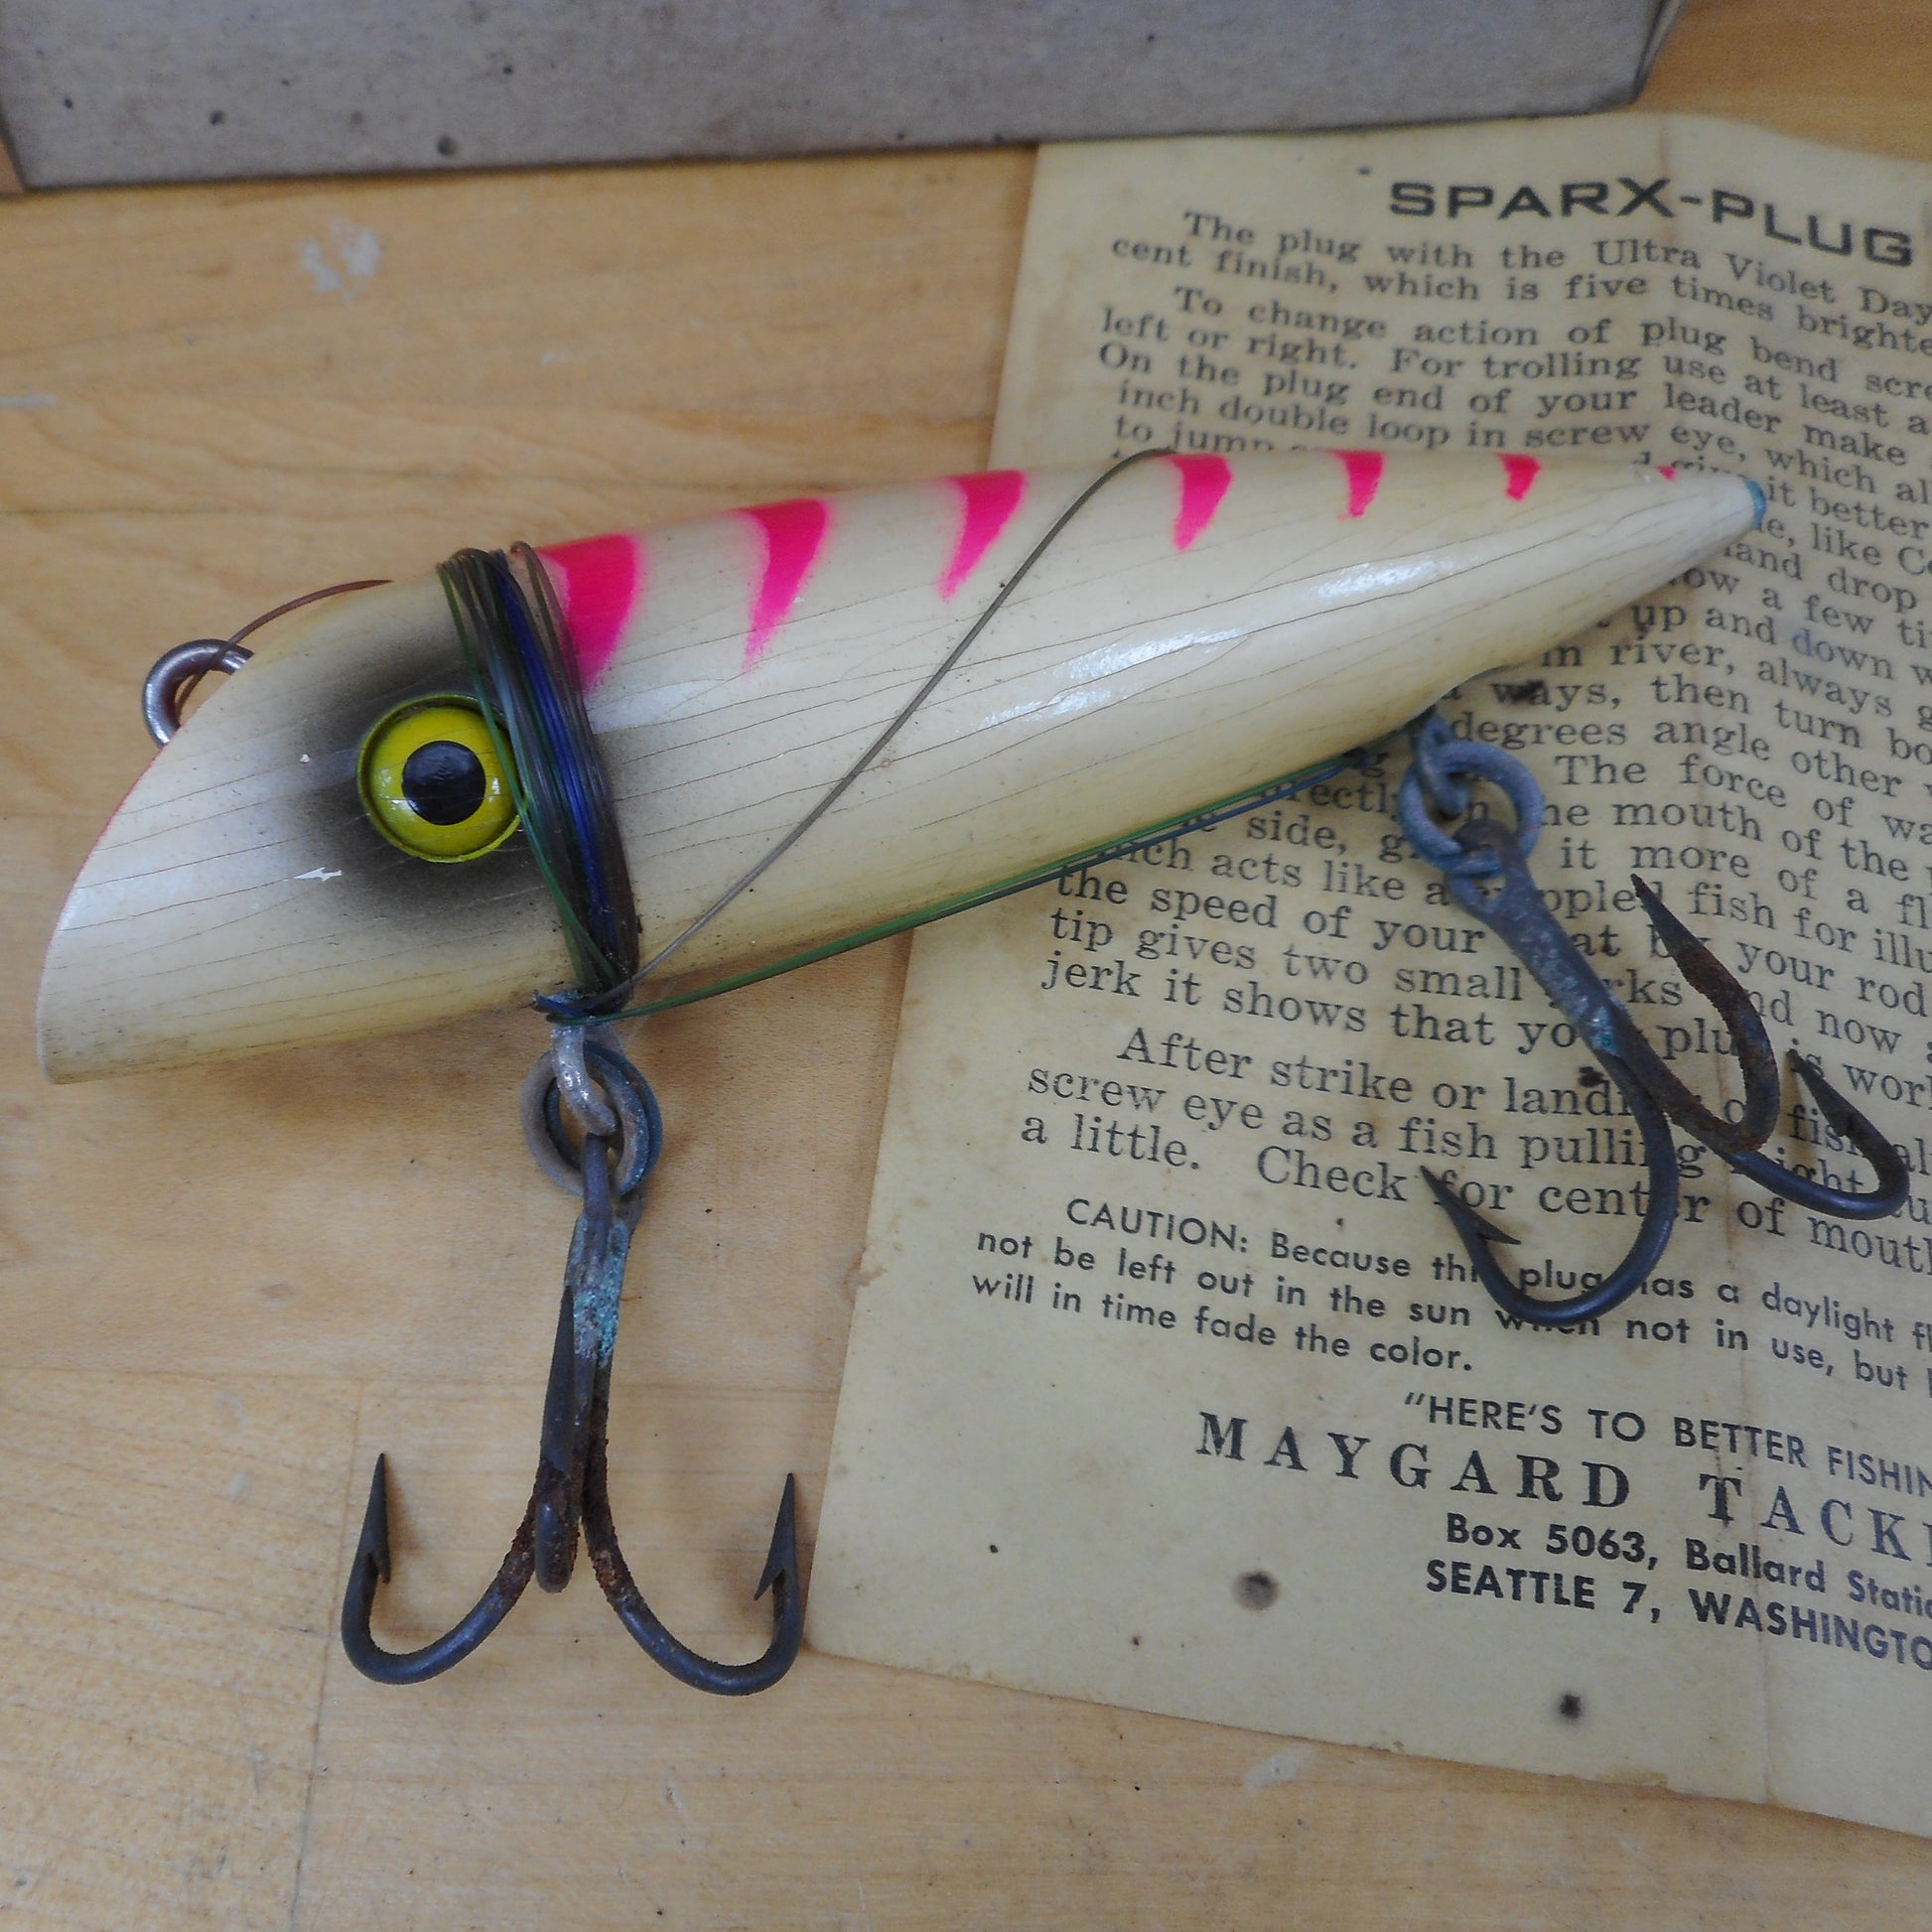 Maygard SparX-Plug Salmon Wood Fishing Lure Plug - Pearl Pink with Box